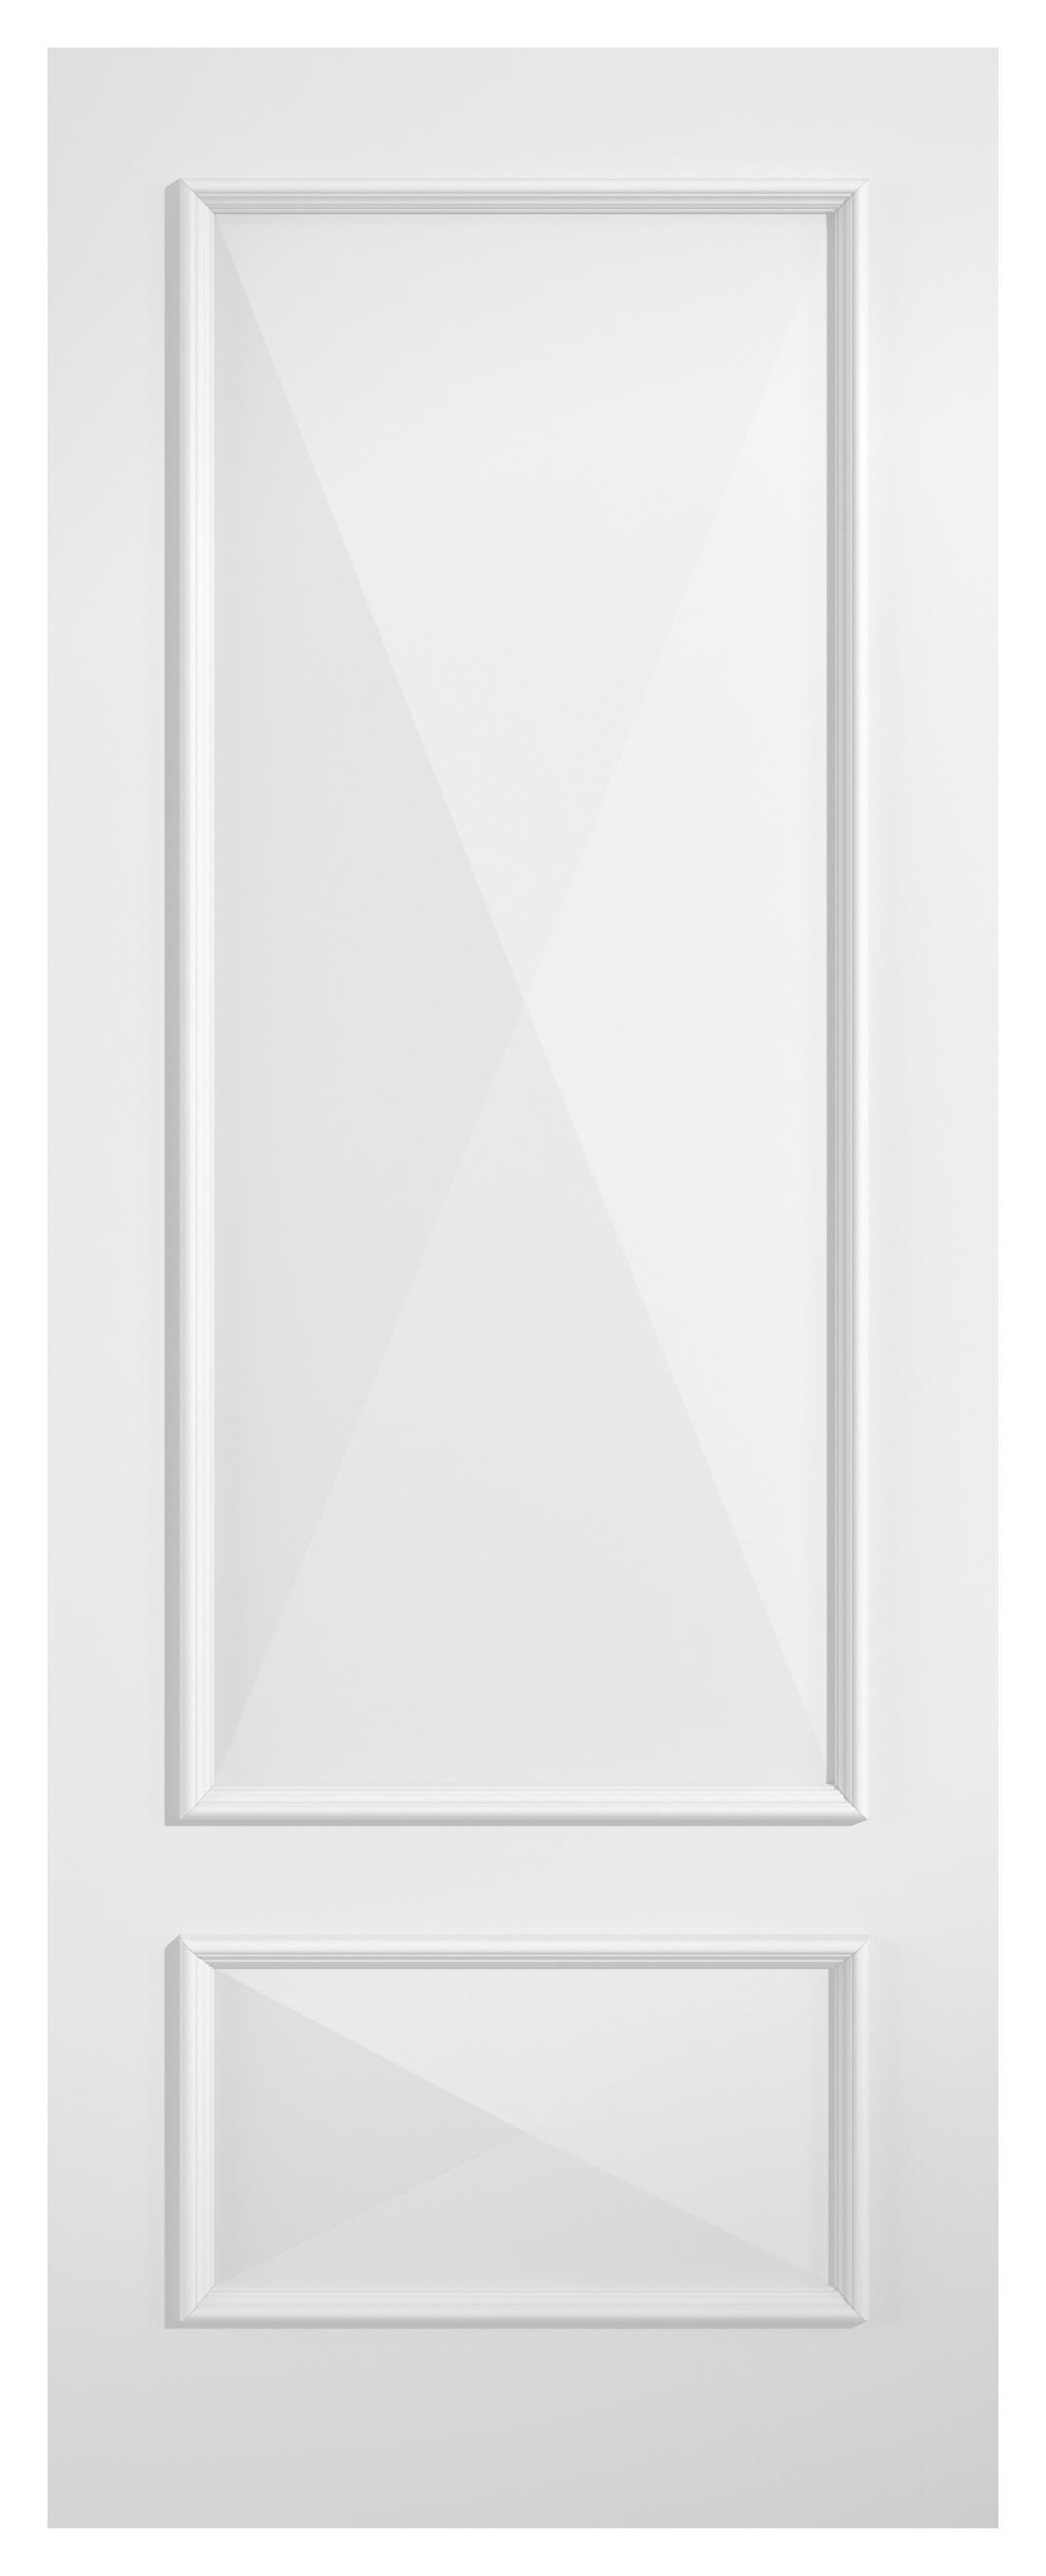 Image of LPD Internal Knightsbridge 2 Panel Primed Plus White FD30 Fire Door - 686 x 1981mm